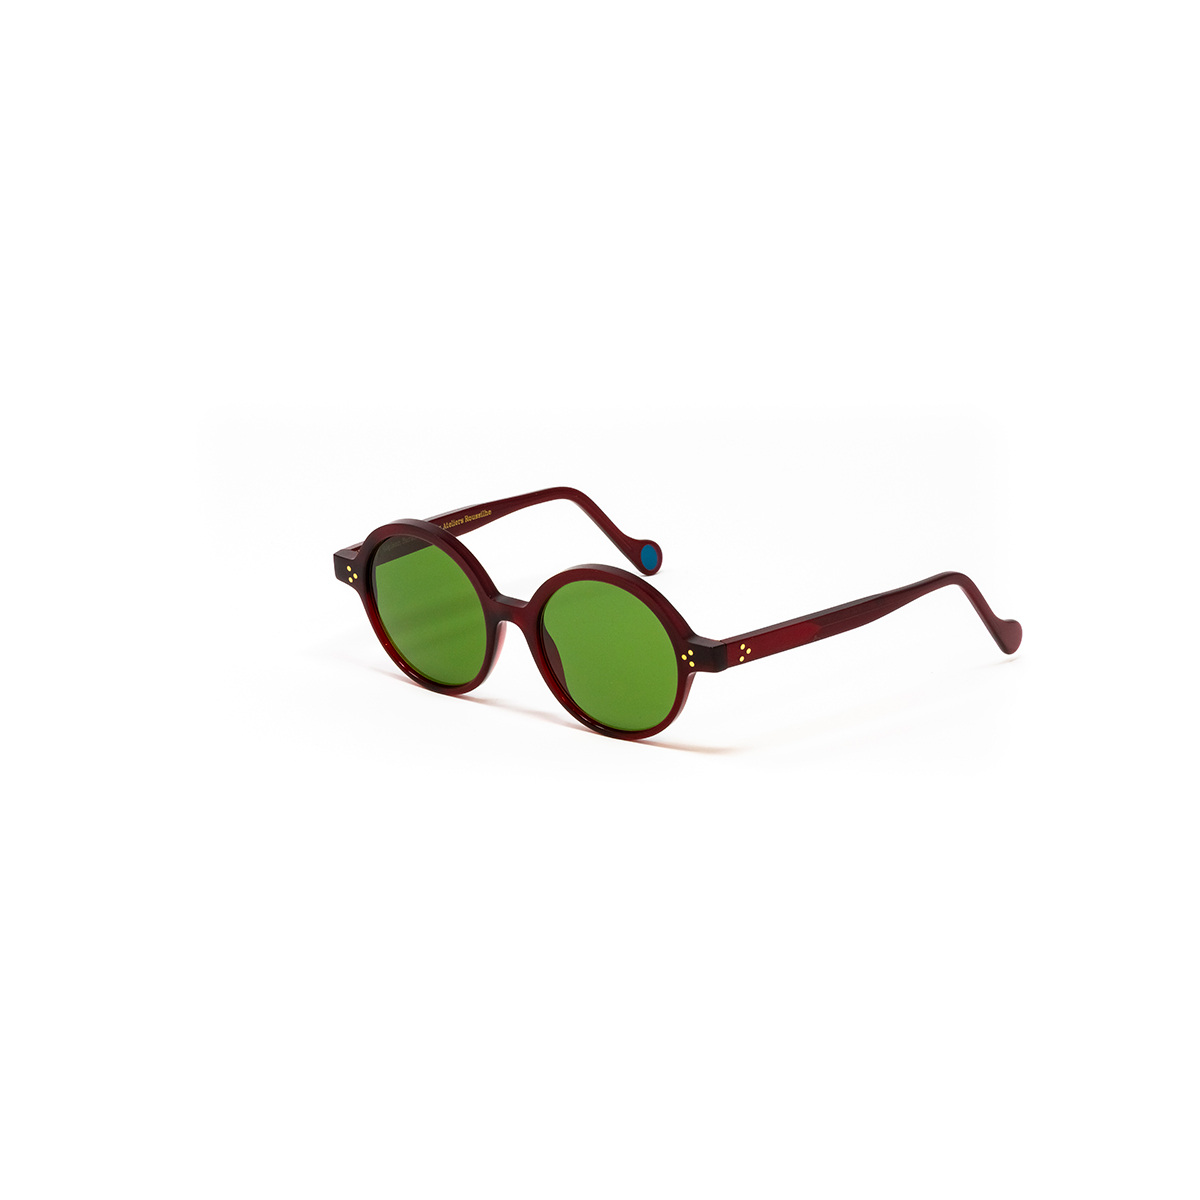 Sunglasses Patti, Bordeaux - Size 50-18 - Organic acetate - image 2